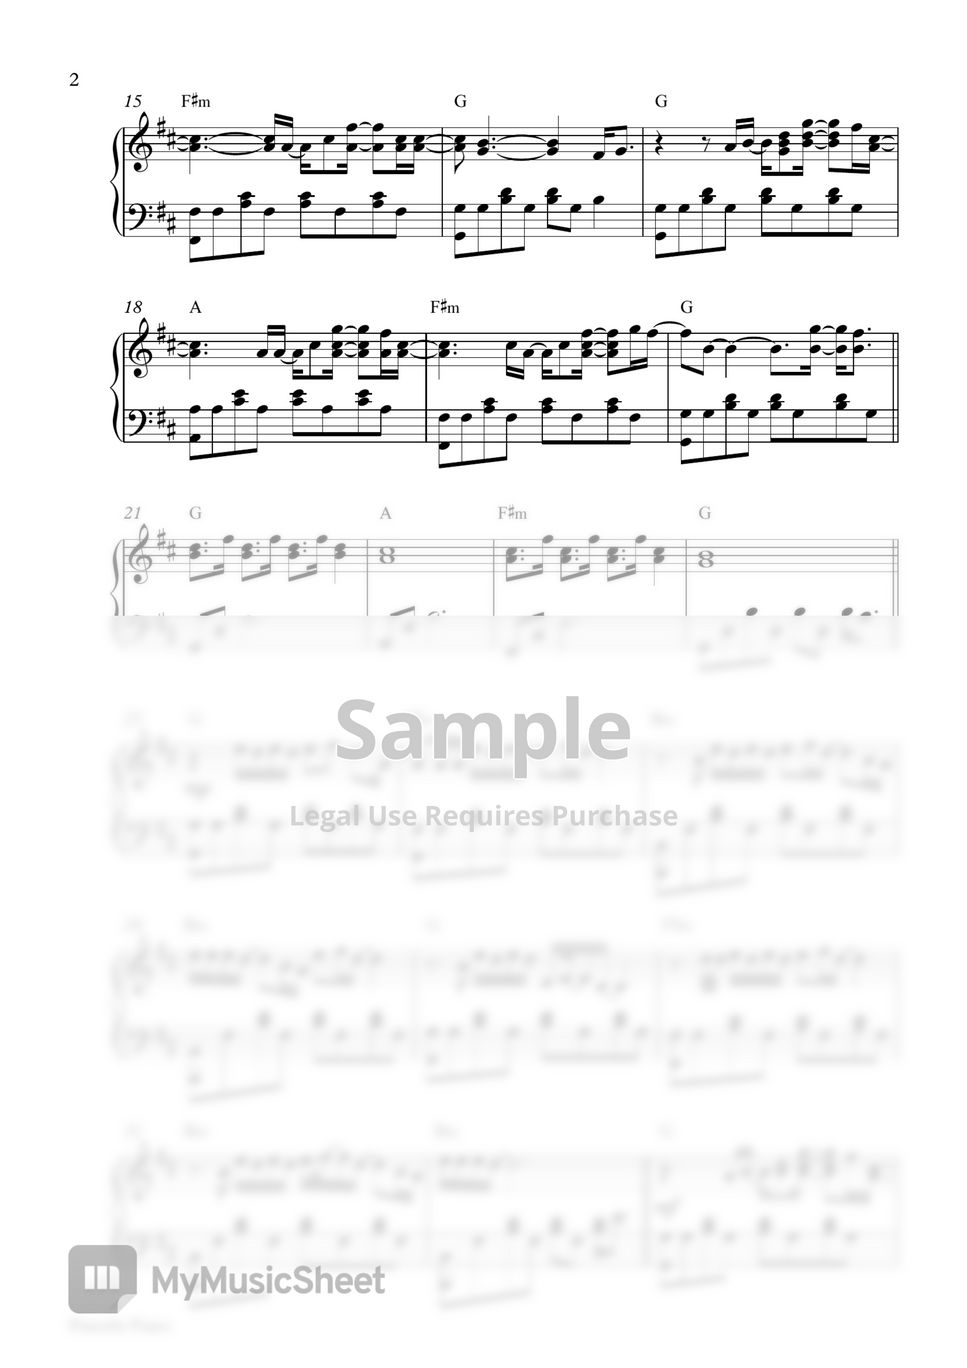 Justin Bieber, Benny Blanco - Lonely (Piano Sheet) by Pianella Piano